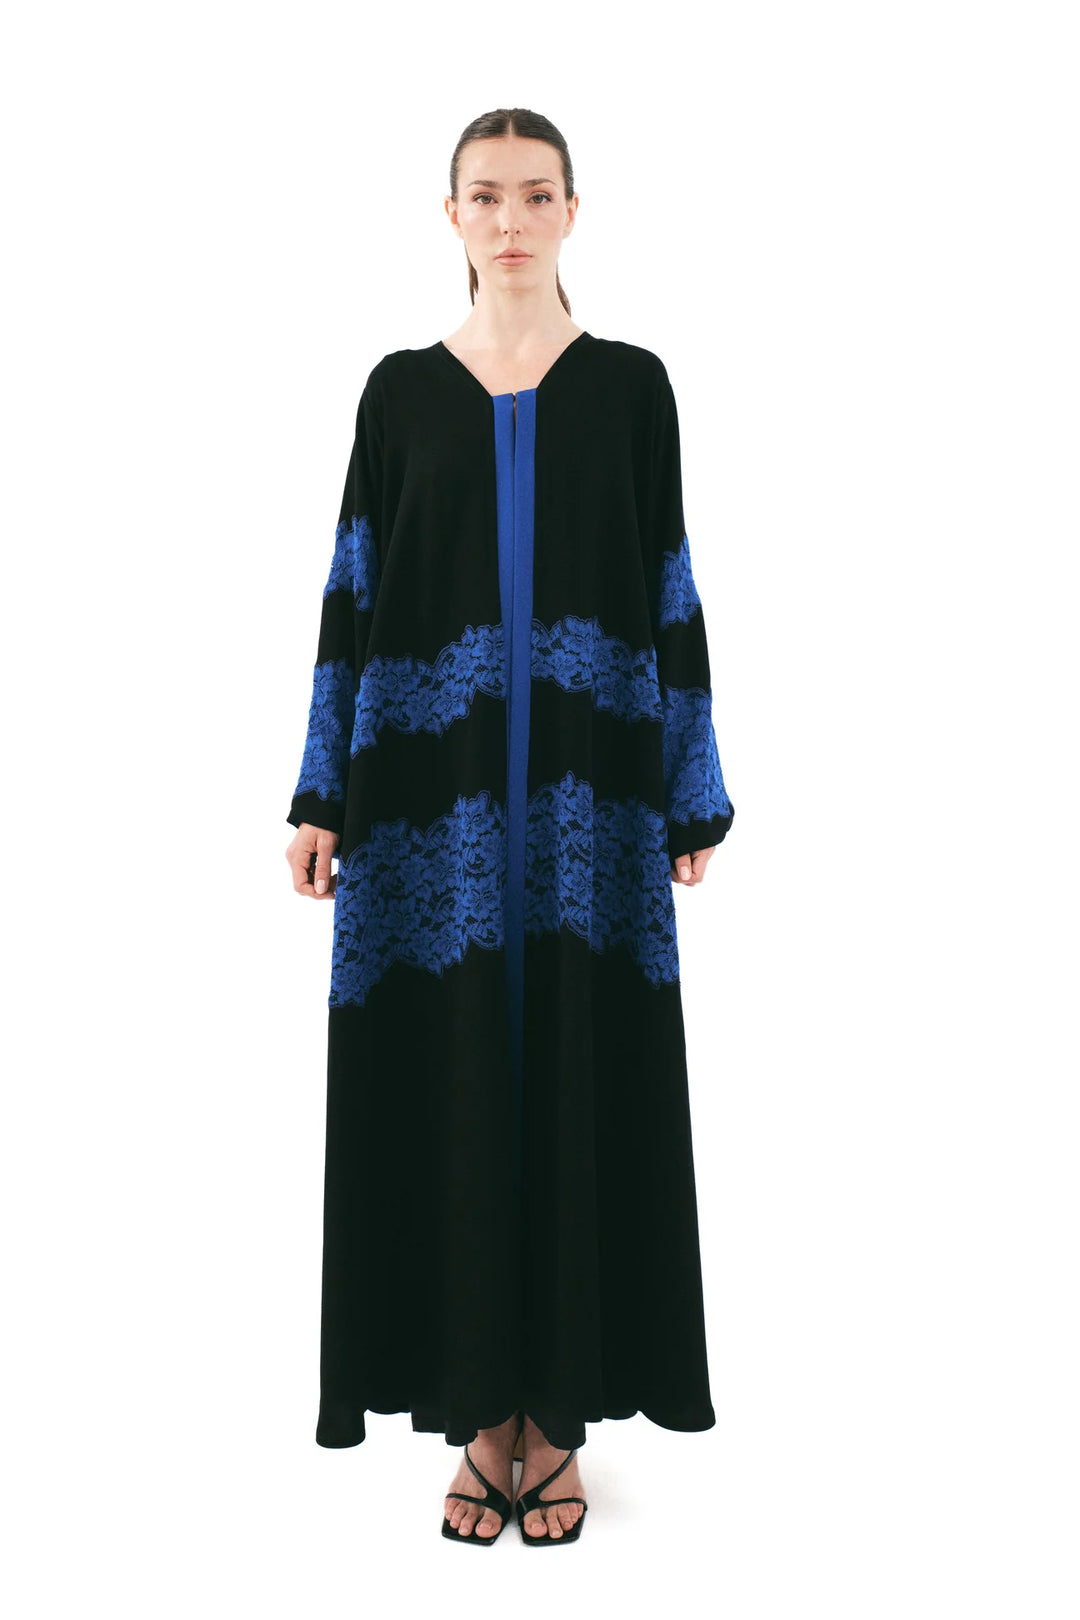 Nera - Royal Blue Lace Abaya C430